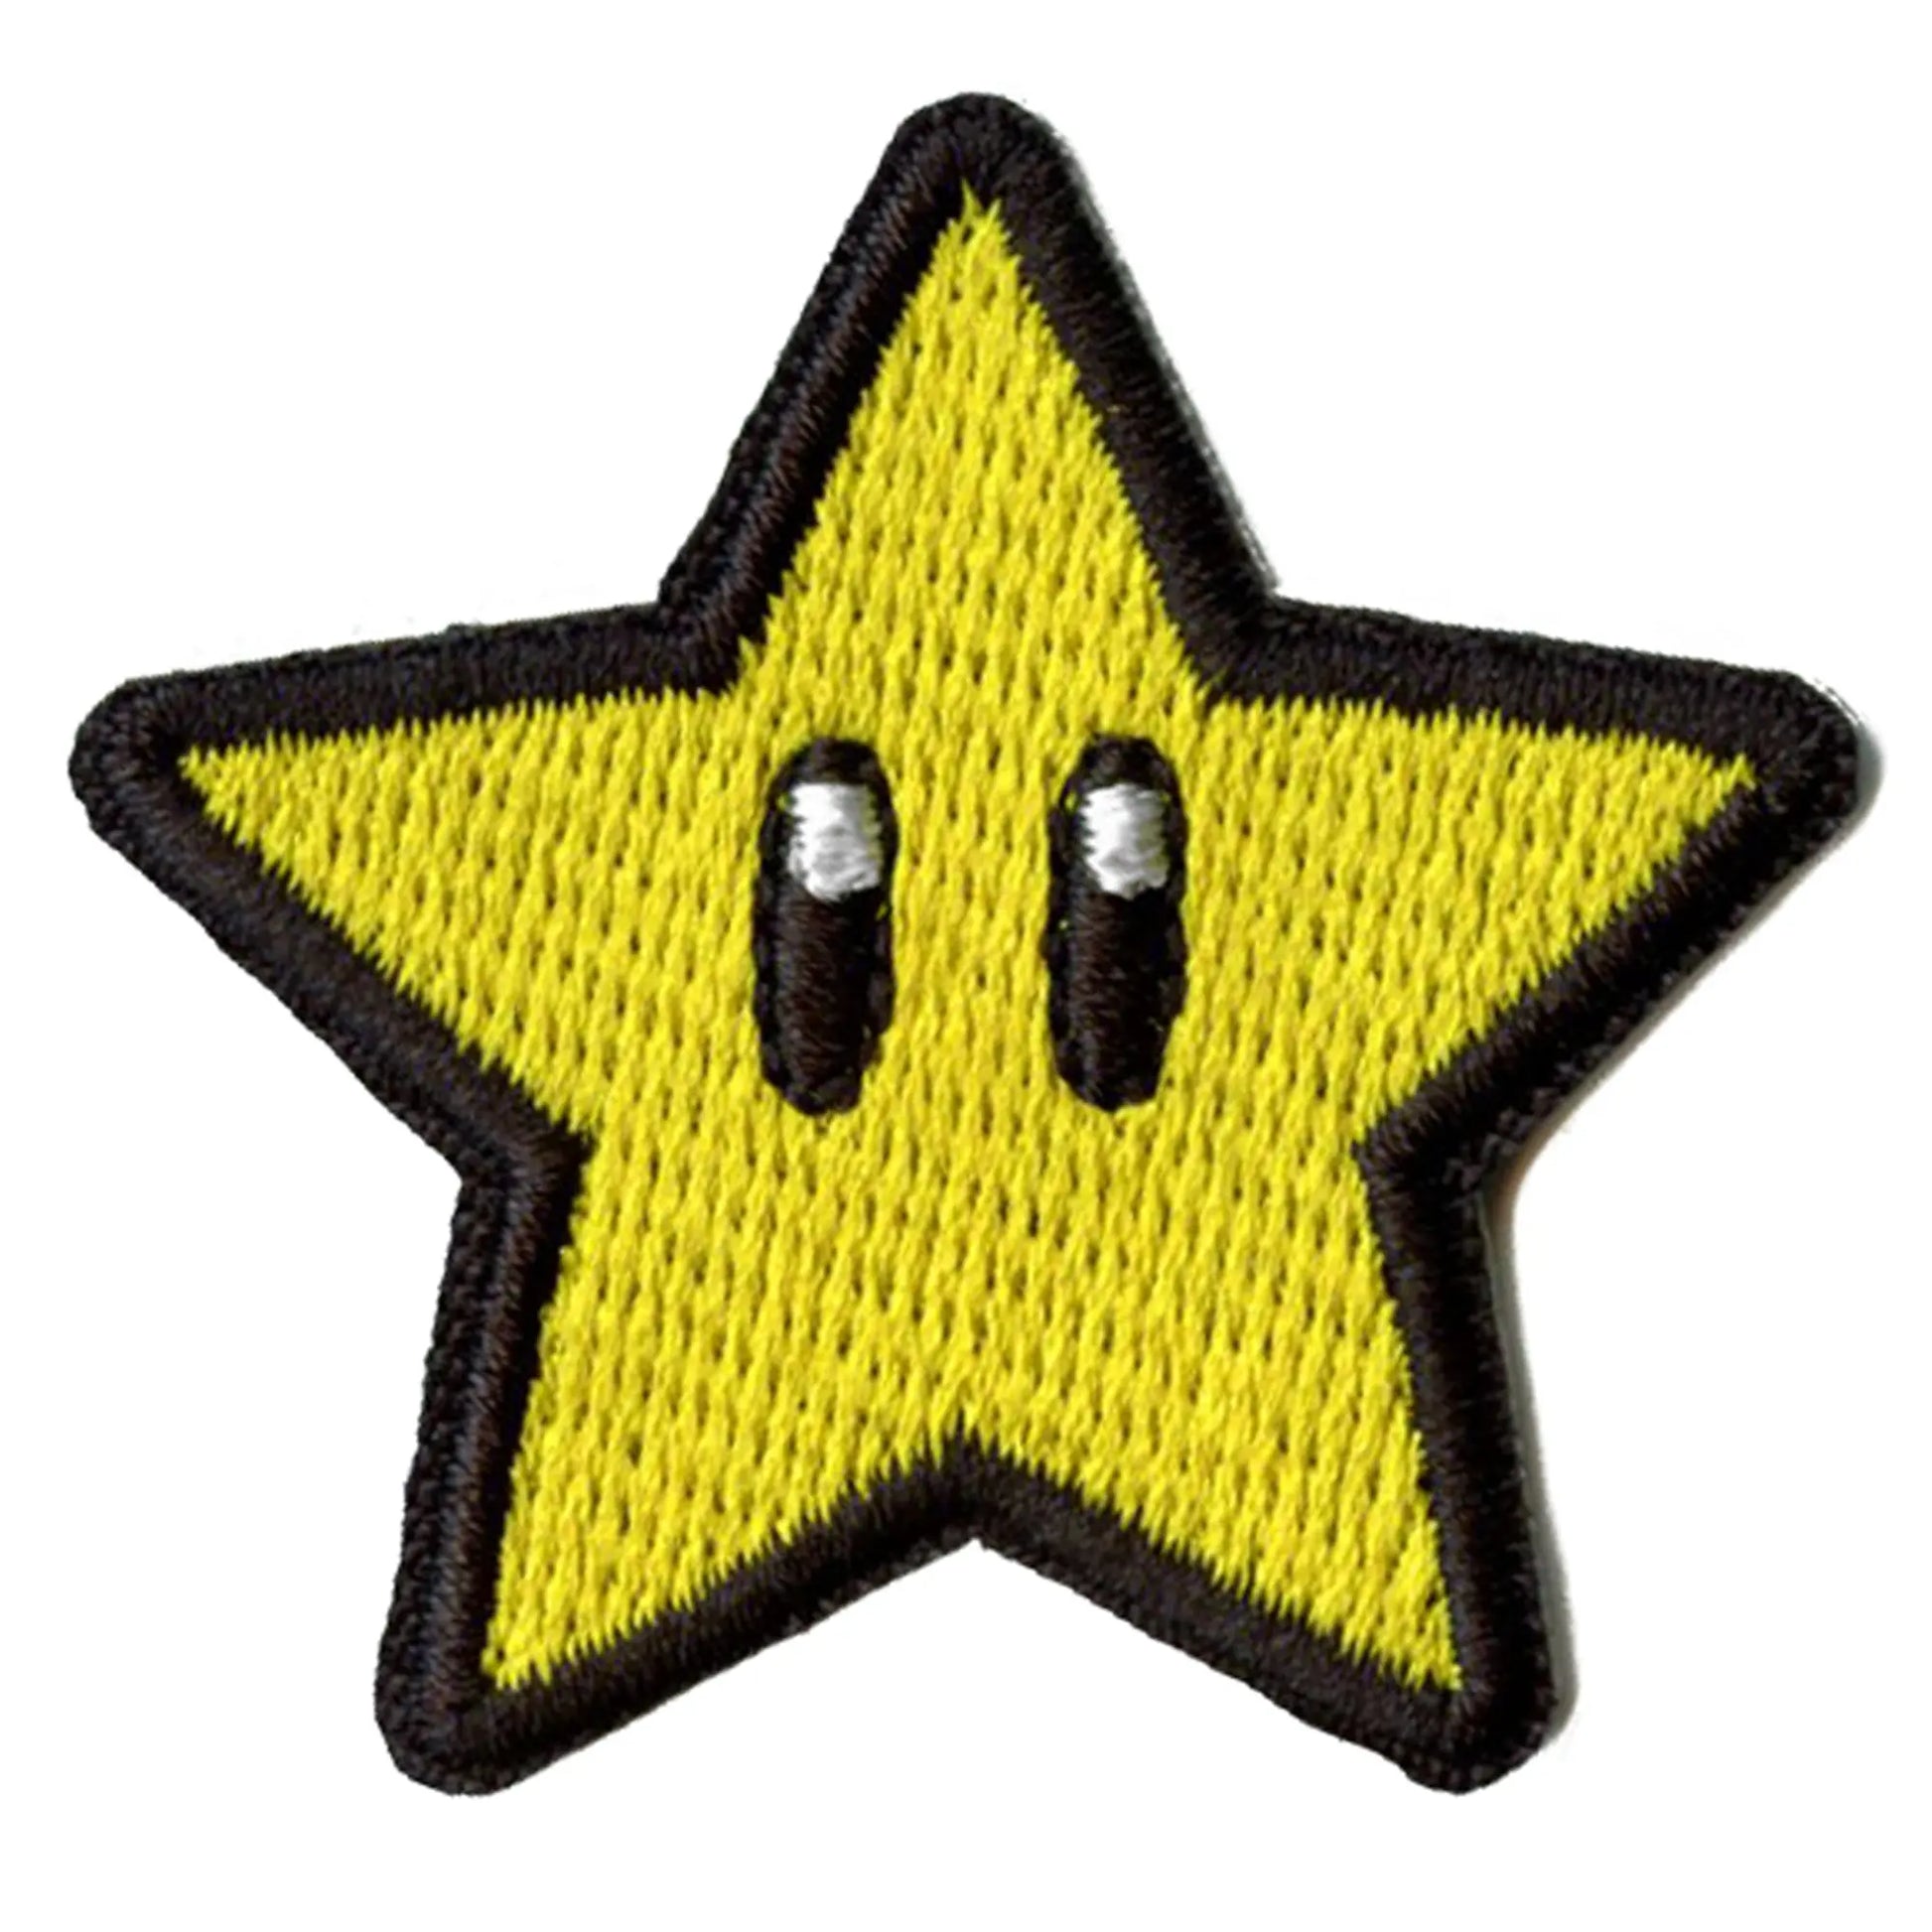 Super Mario Small Star Patch Nintendo Smash Bros Embroidered Iron On